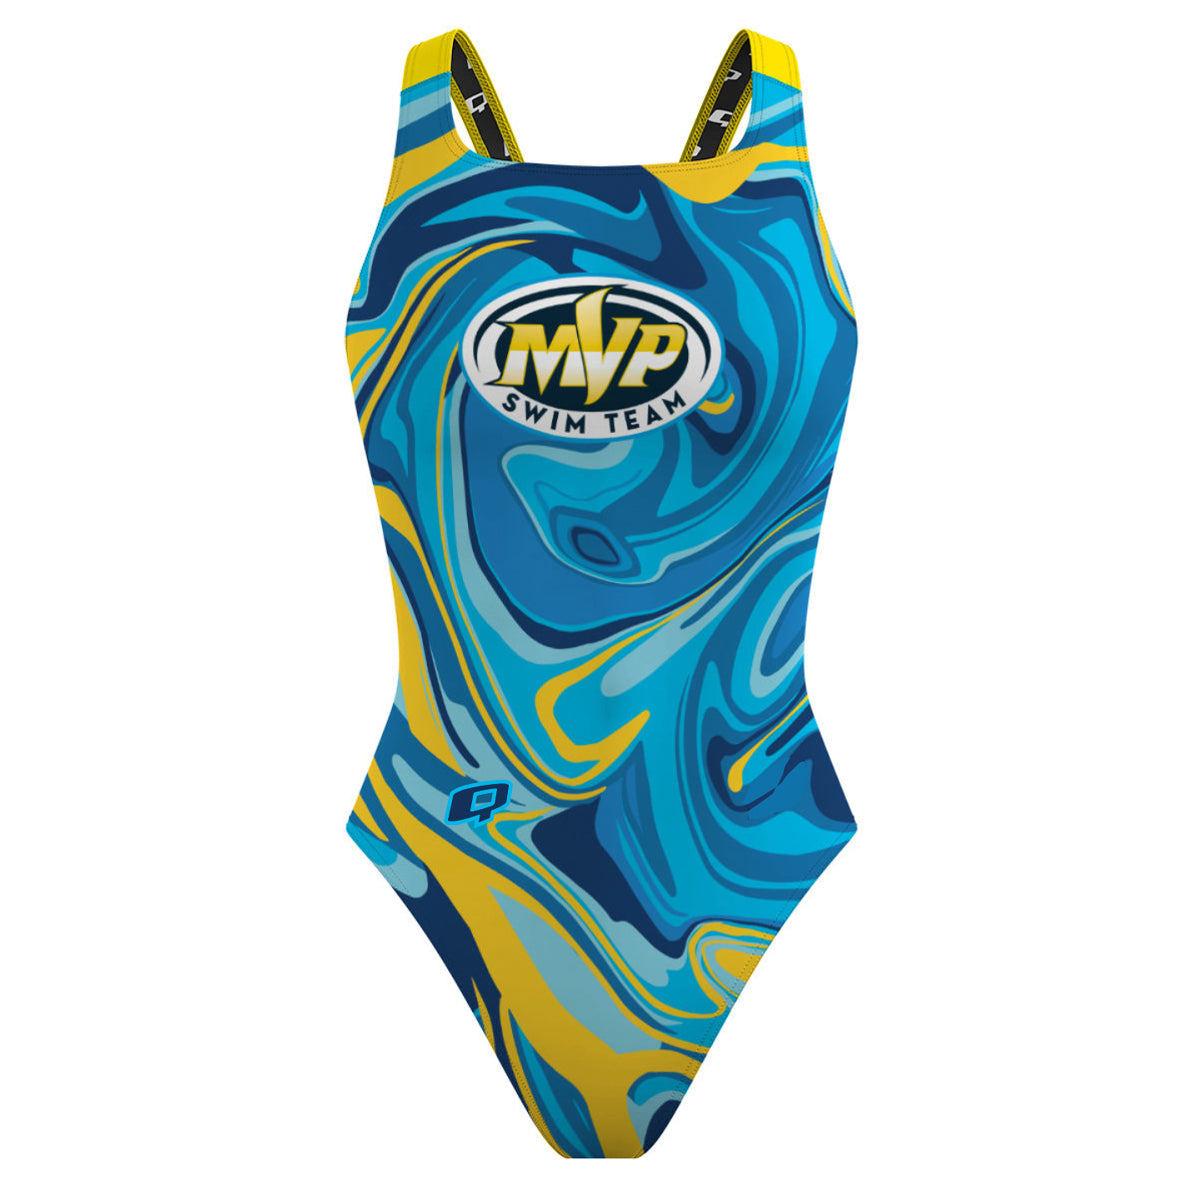 Moraga Valley Pool Swim Team (MVP) FV - Classic Strap Swimsuit